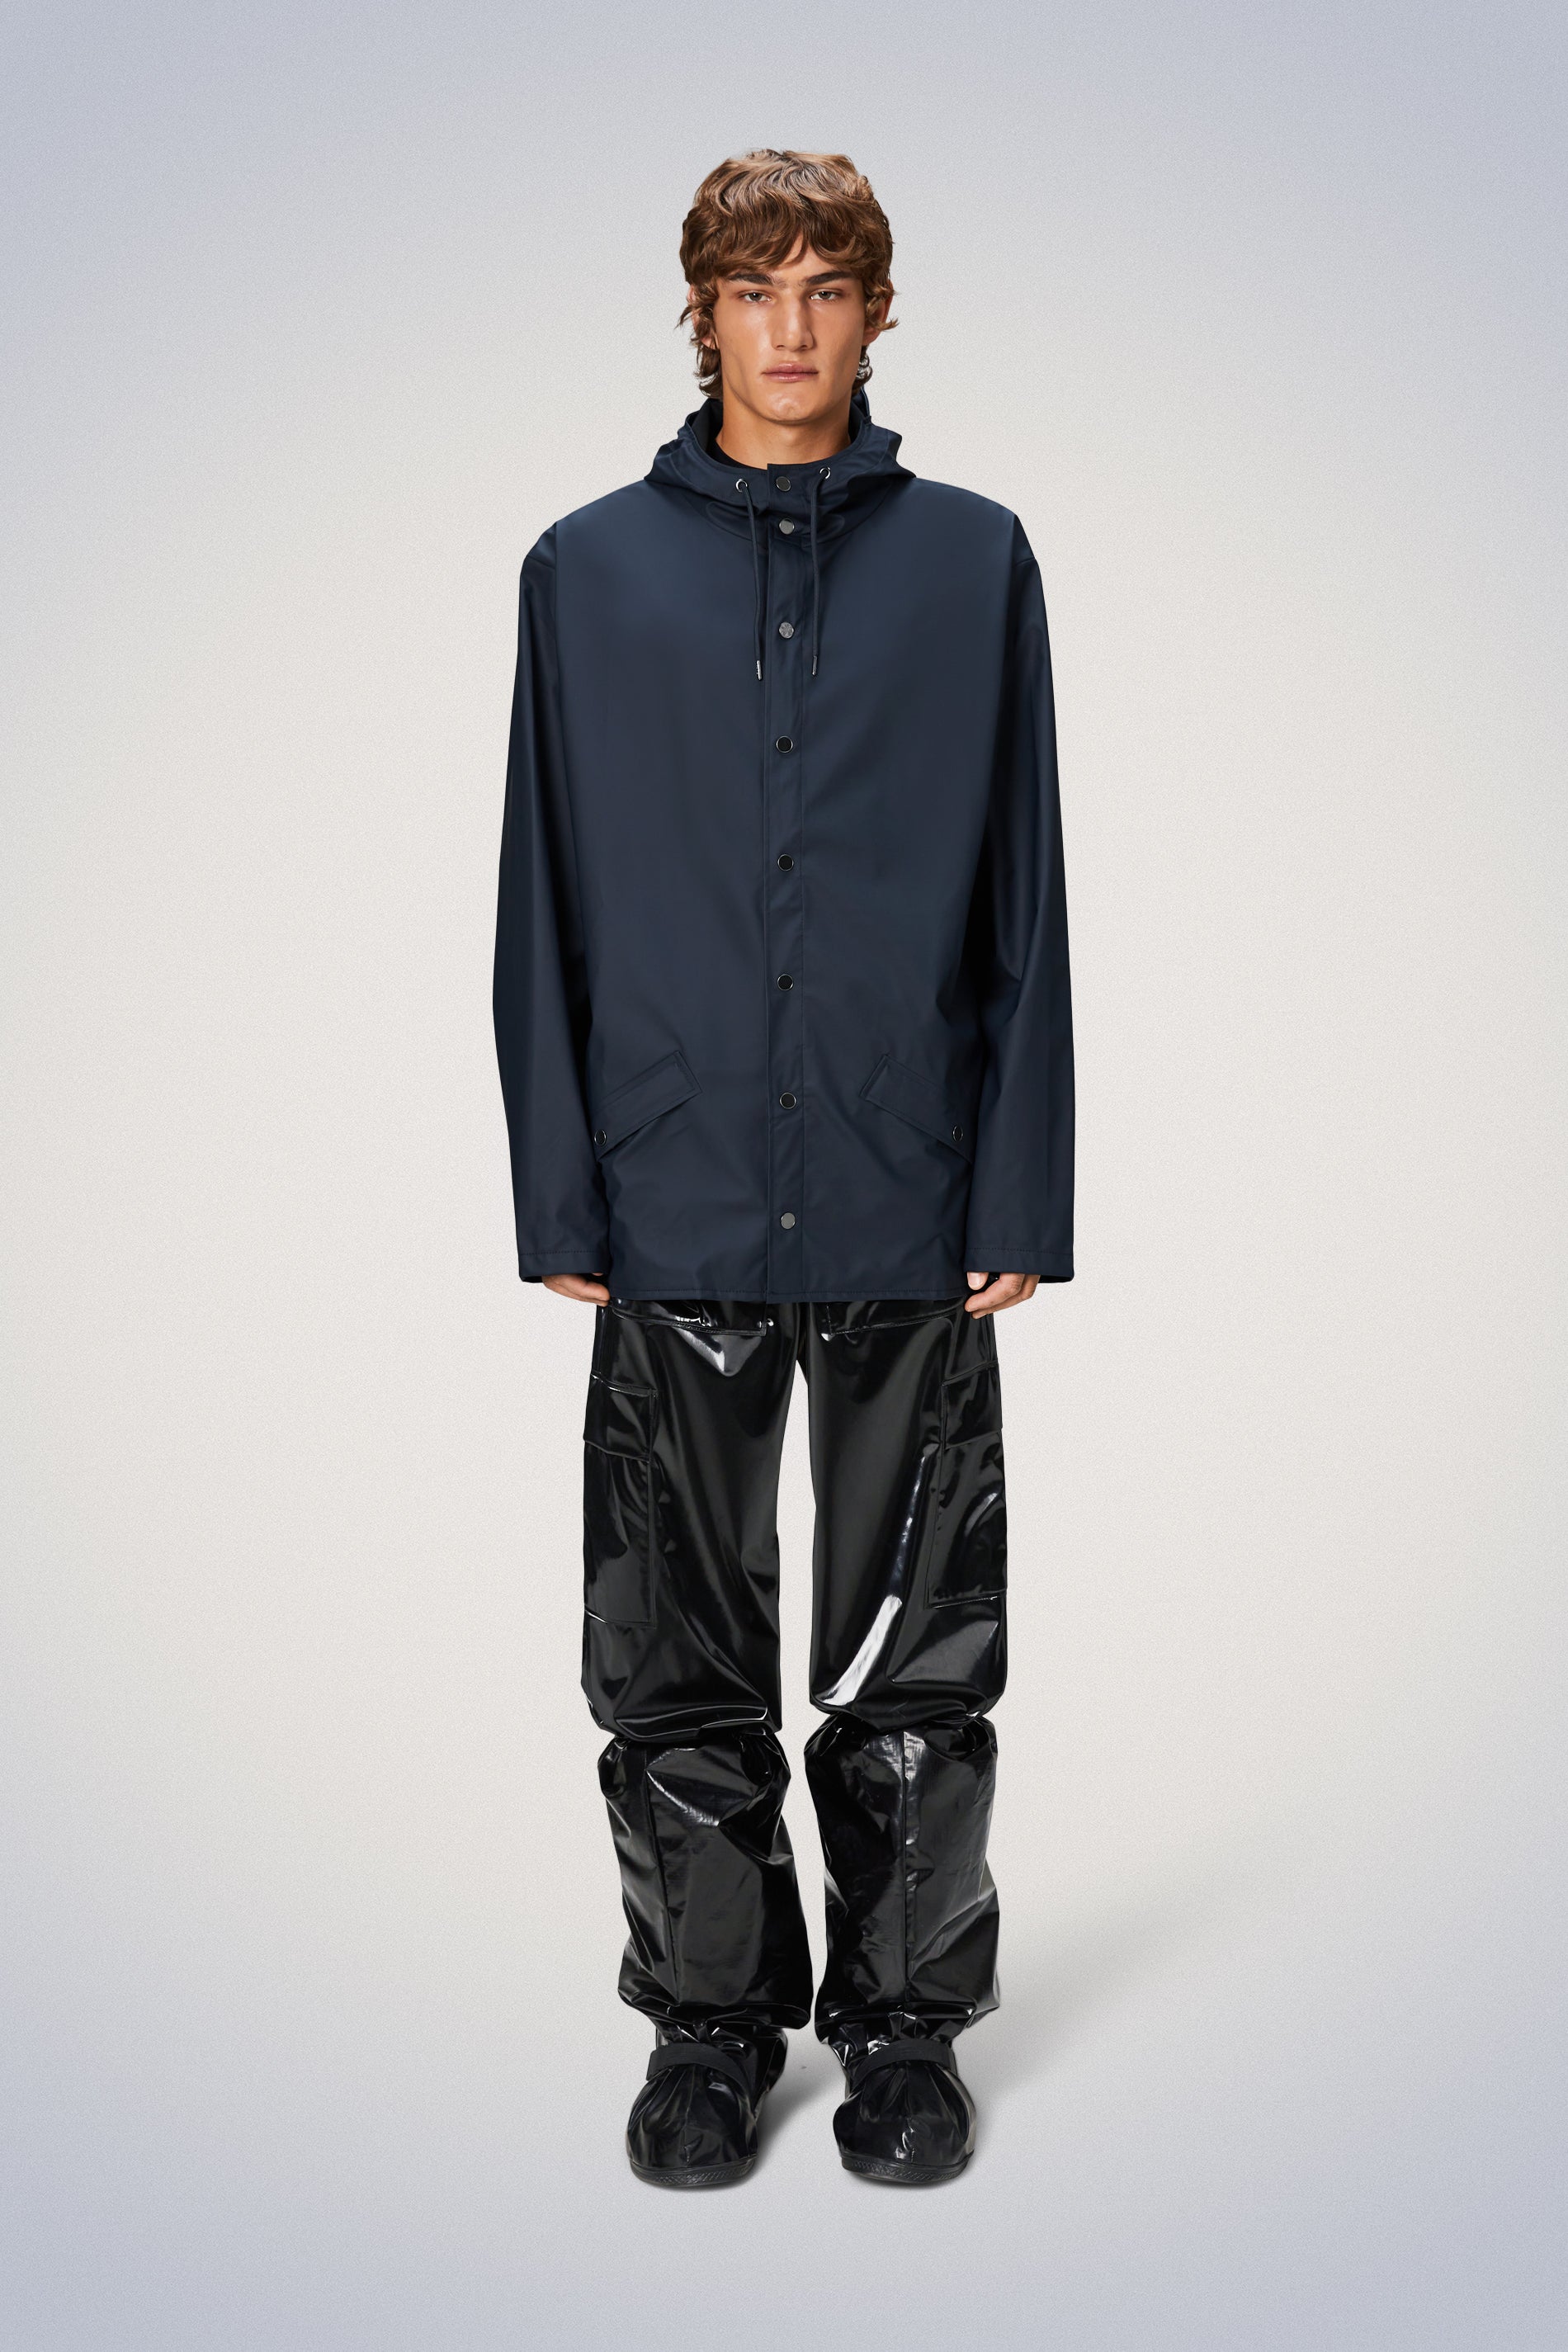 OURCAN Rain Suits for Men Fishing Rain Gear for Men Waterproof Lightweight Rain Coats for Men Waterproof with Hood and Pants (Black,M)